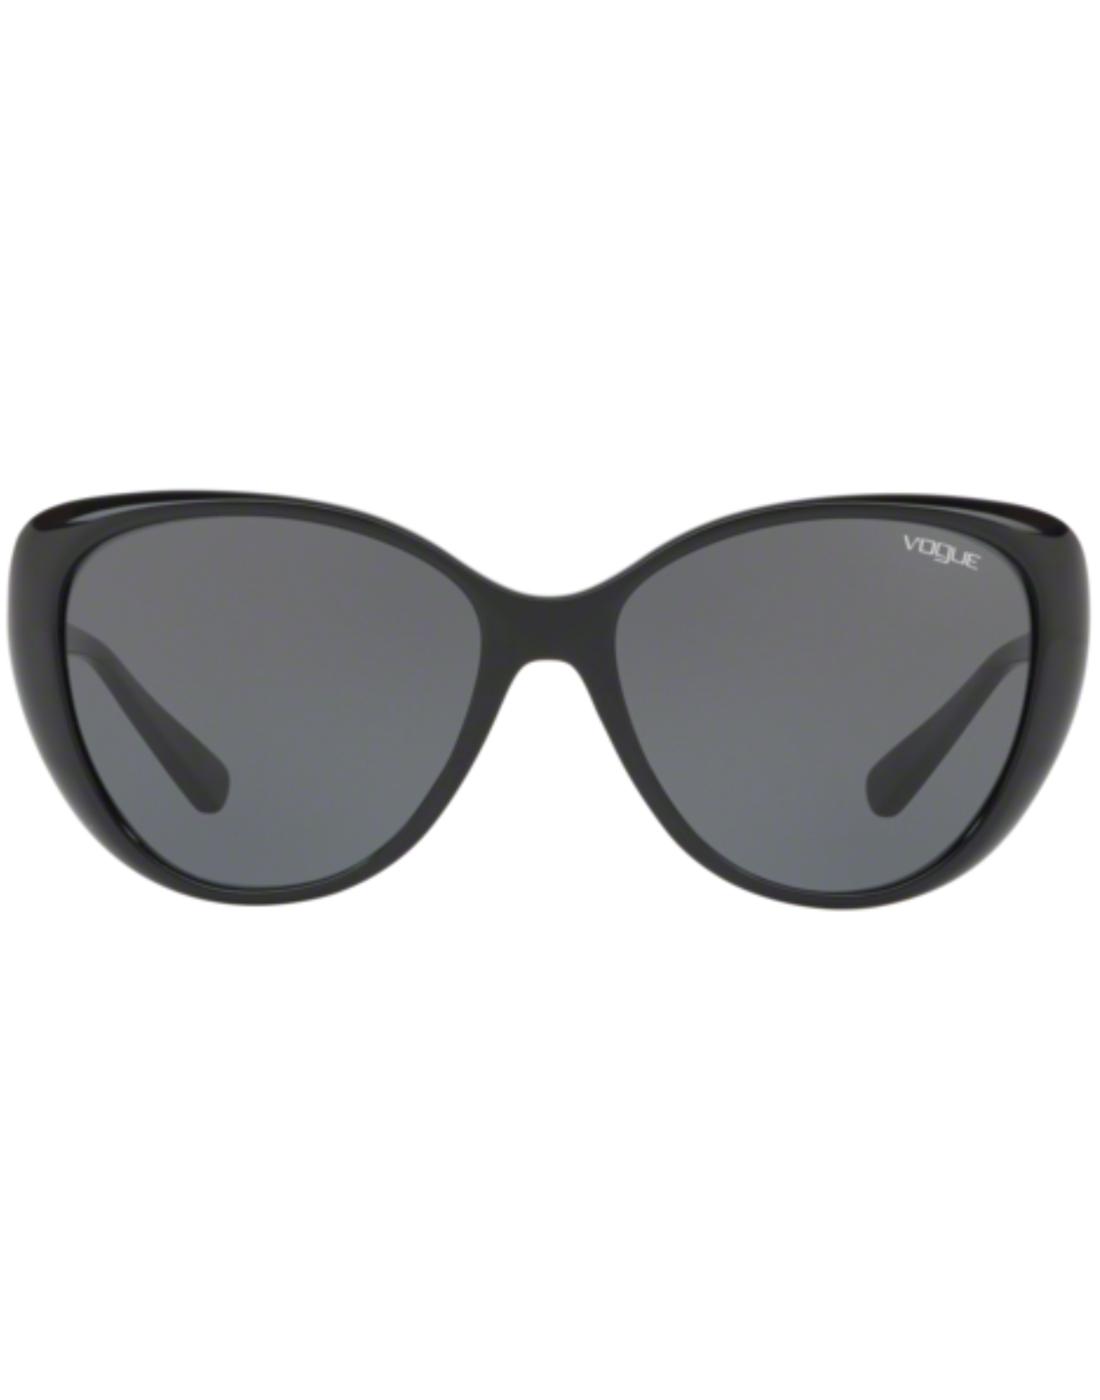 VOGUE Retro 60s Vintage Cats-Eye Daisy Sunglasses in Black